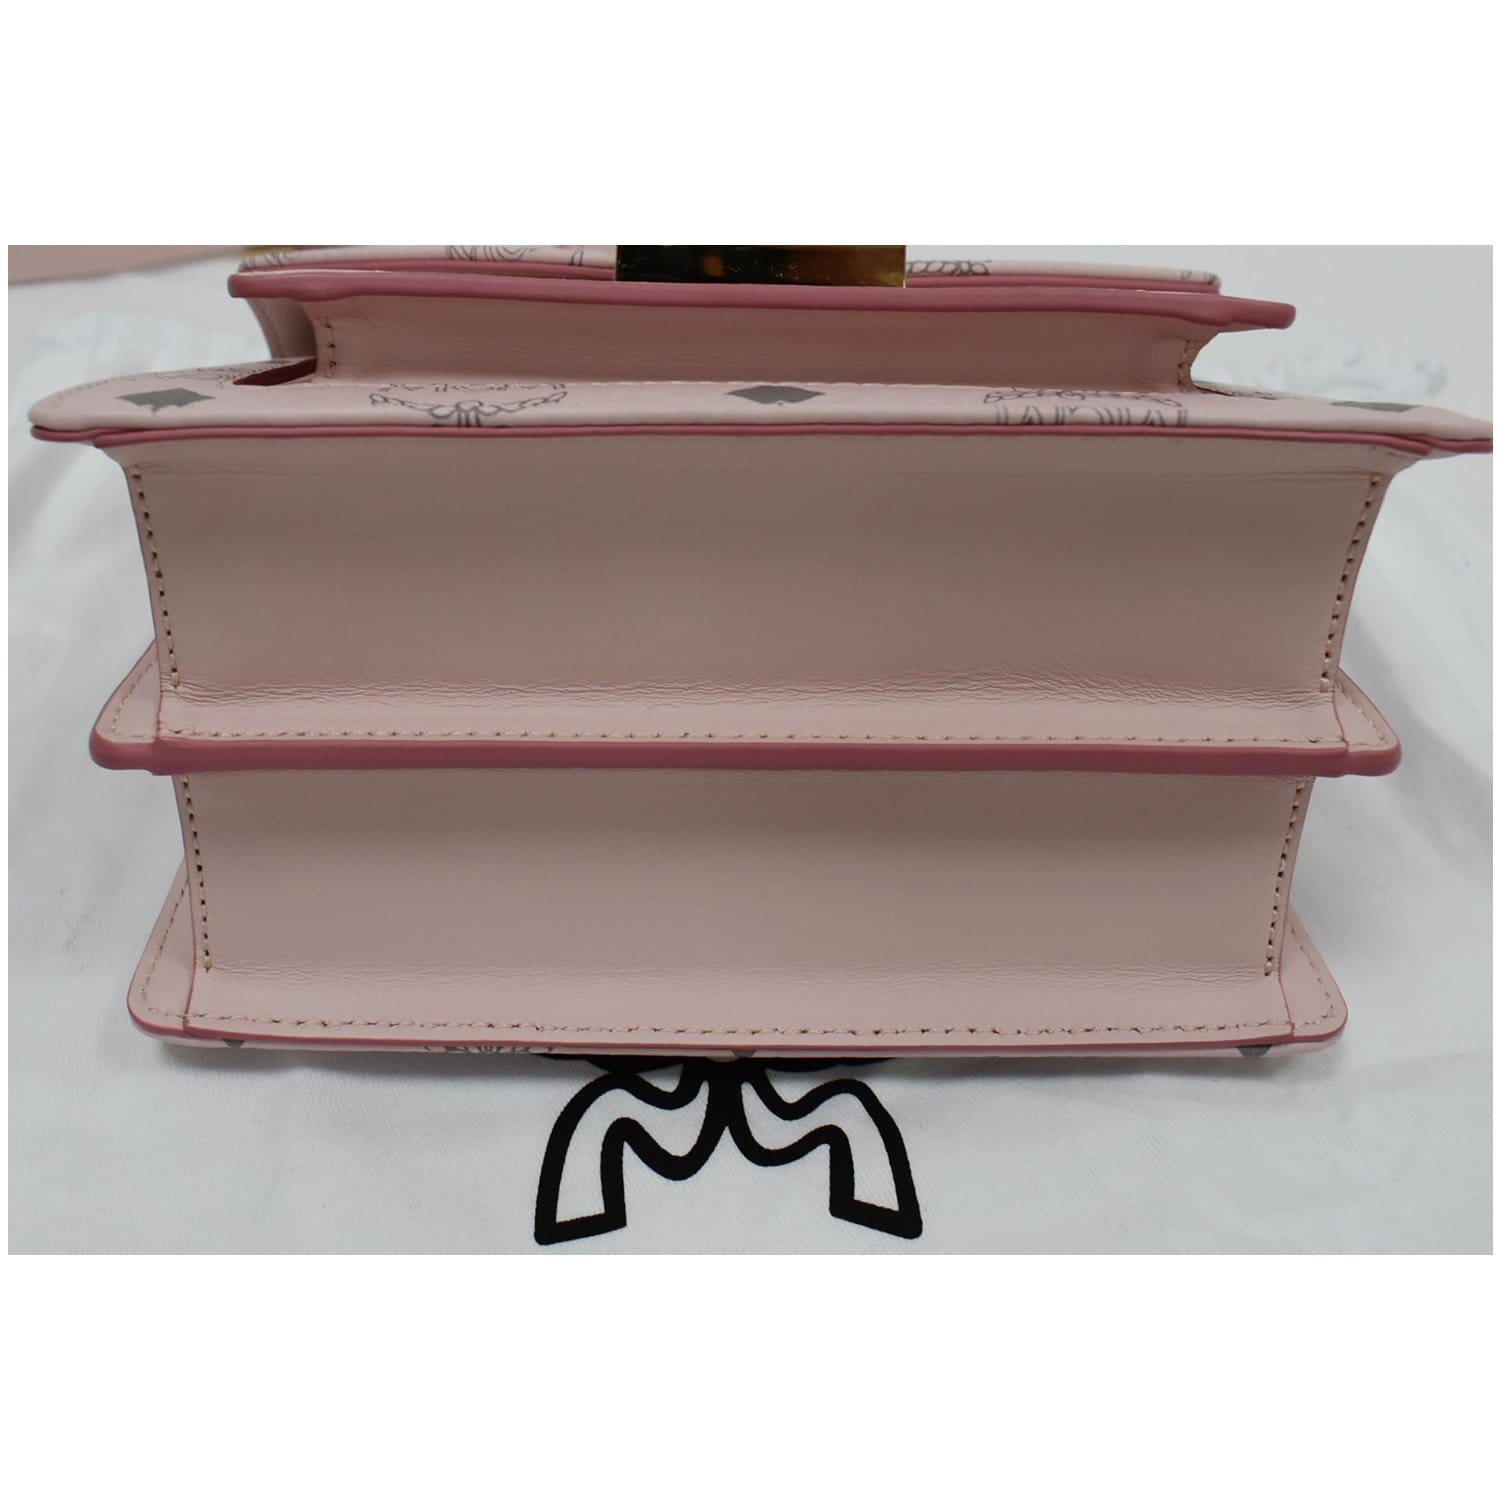 MCM Visetos Mini Patricia Crossbody Bag Soft Pink 1208376